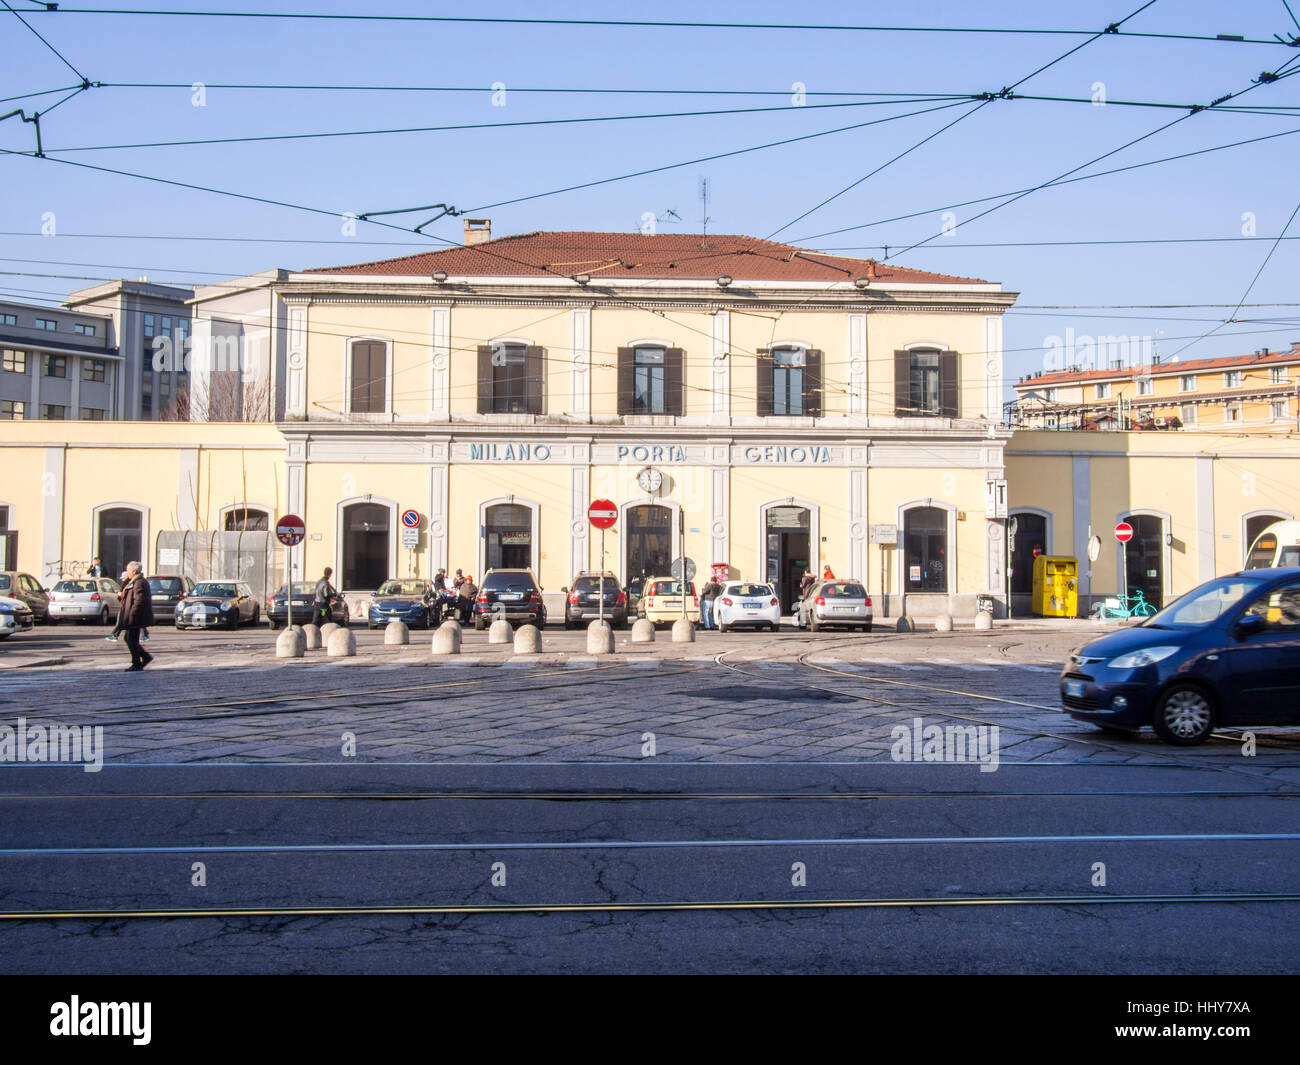 Porta Genova Train Station, Milan Italy Stock Photo - Alamy